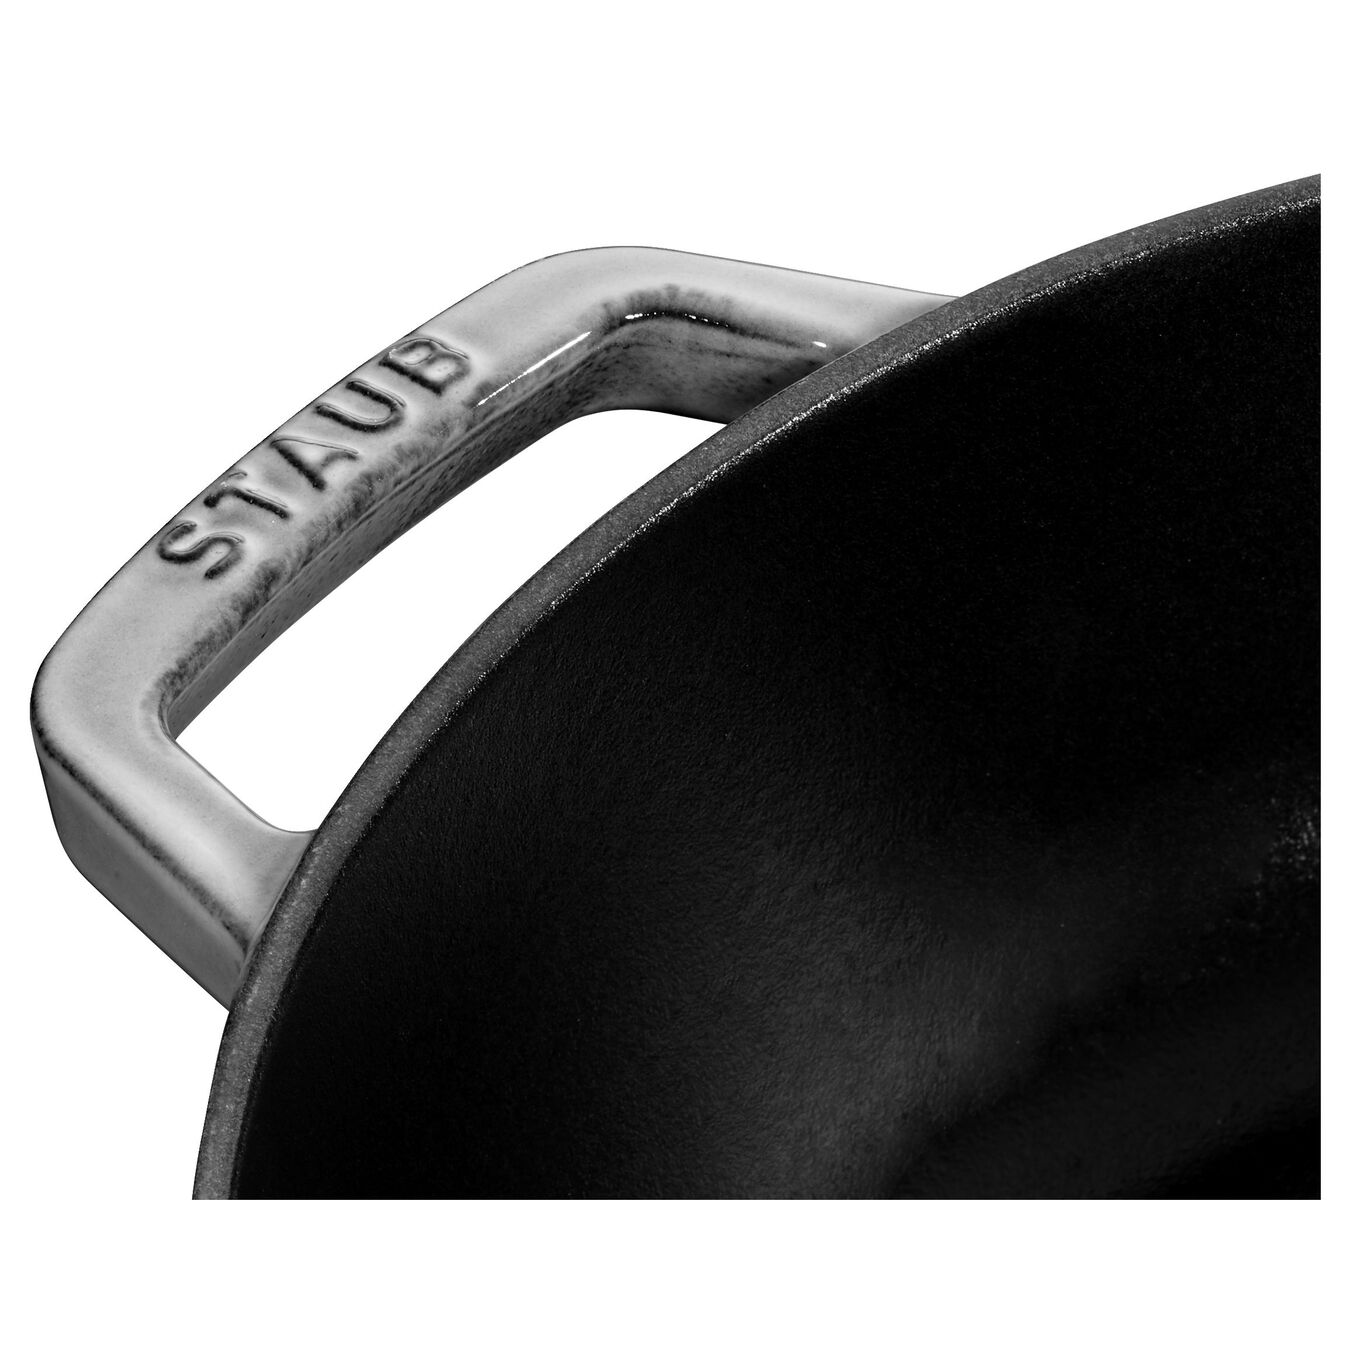 24 cm round Cast iron Saute pan Chistera graphite-grey,,large 5